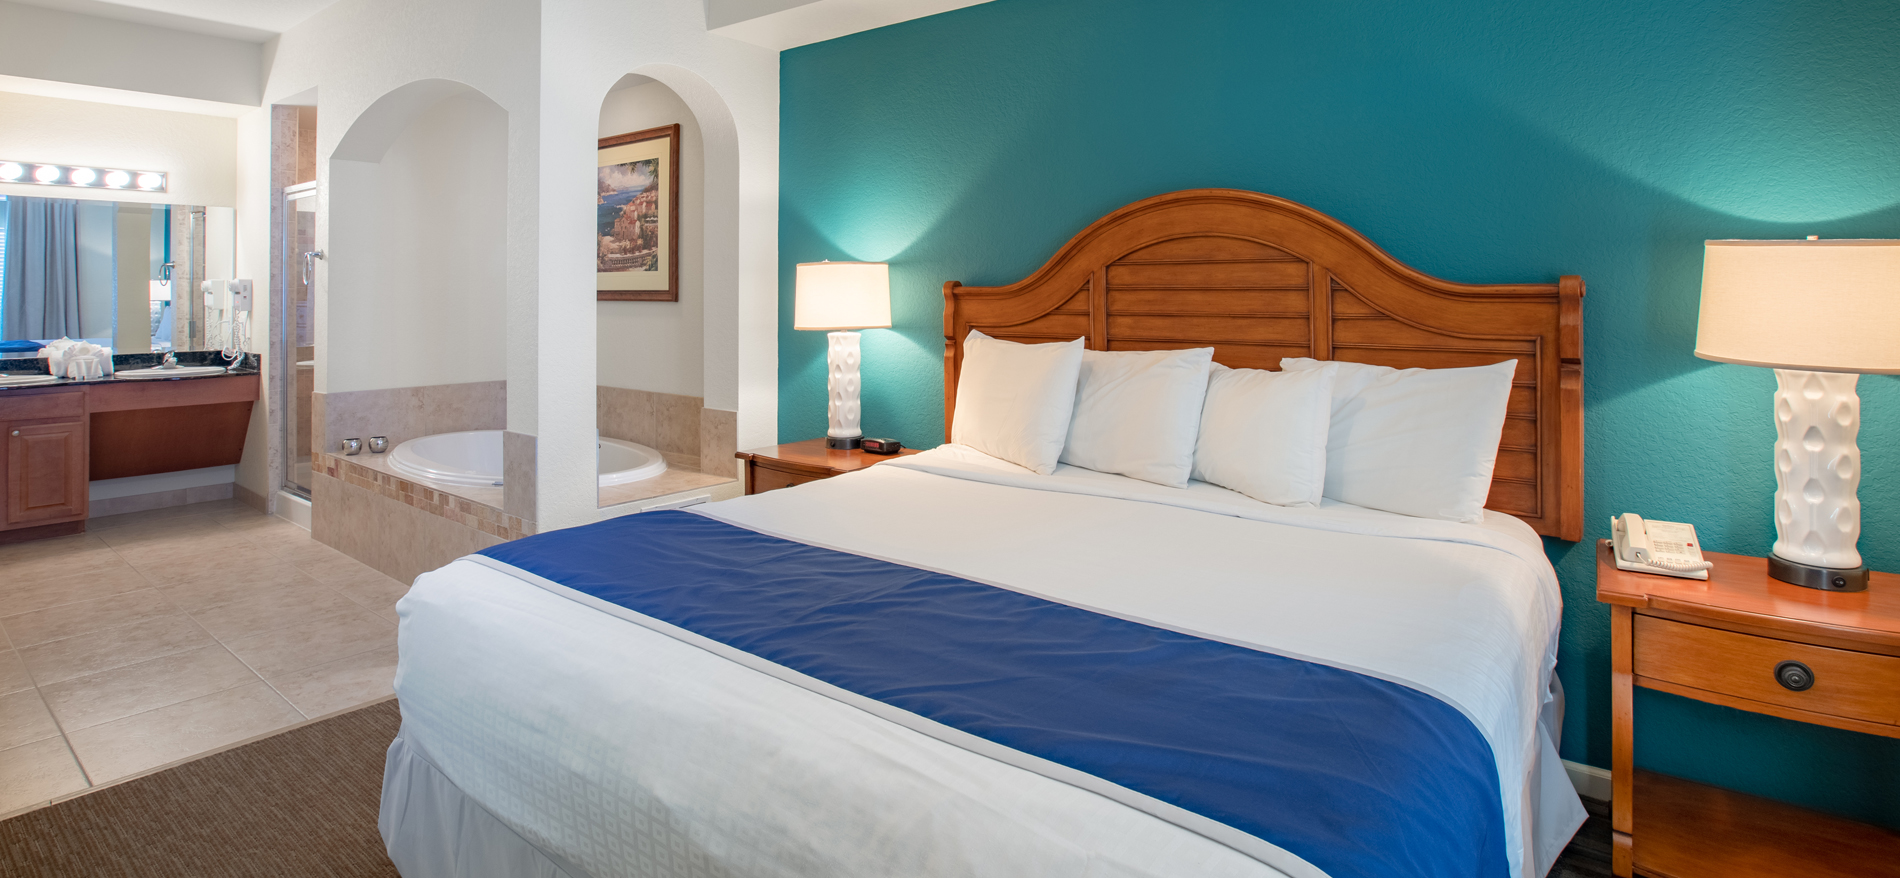 Lake Buena Vista Resort Village & Spa - Master bedroom